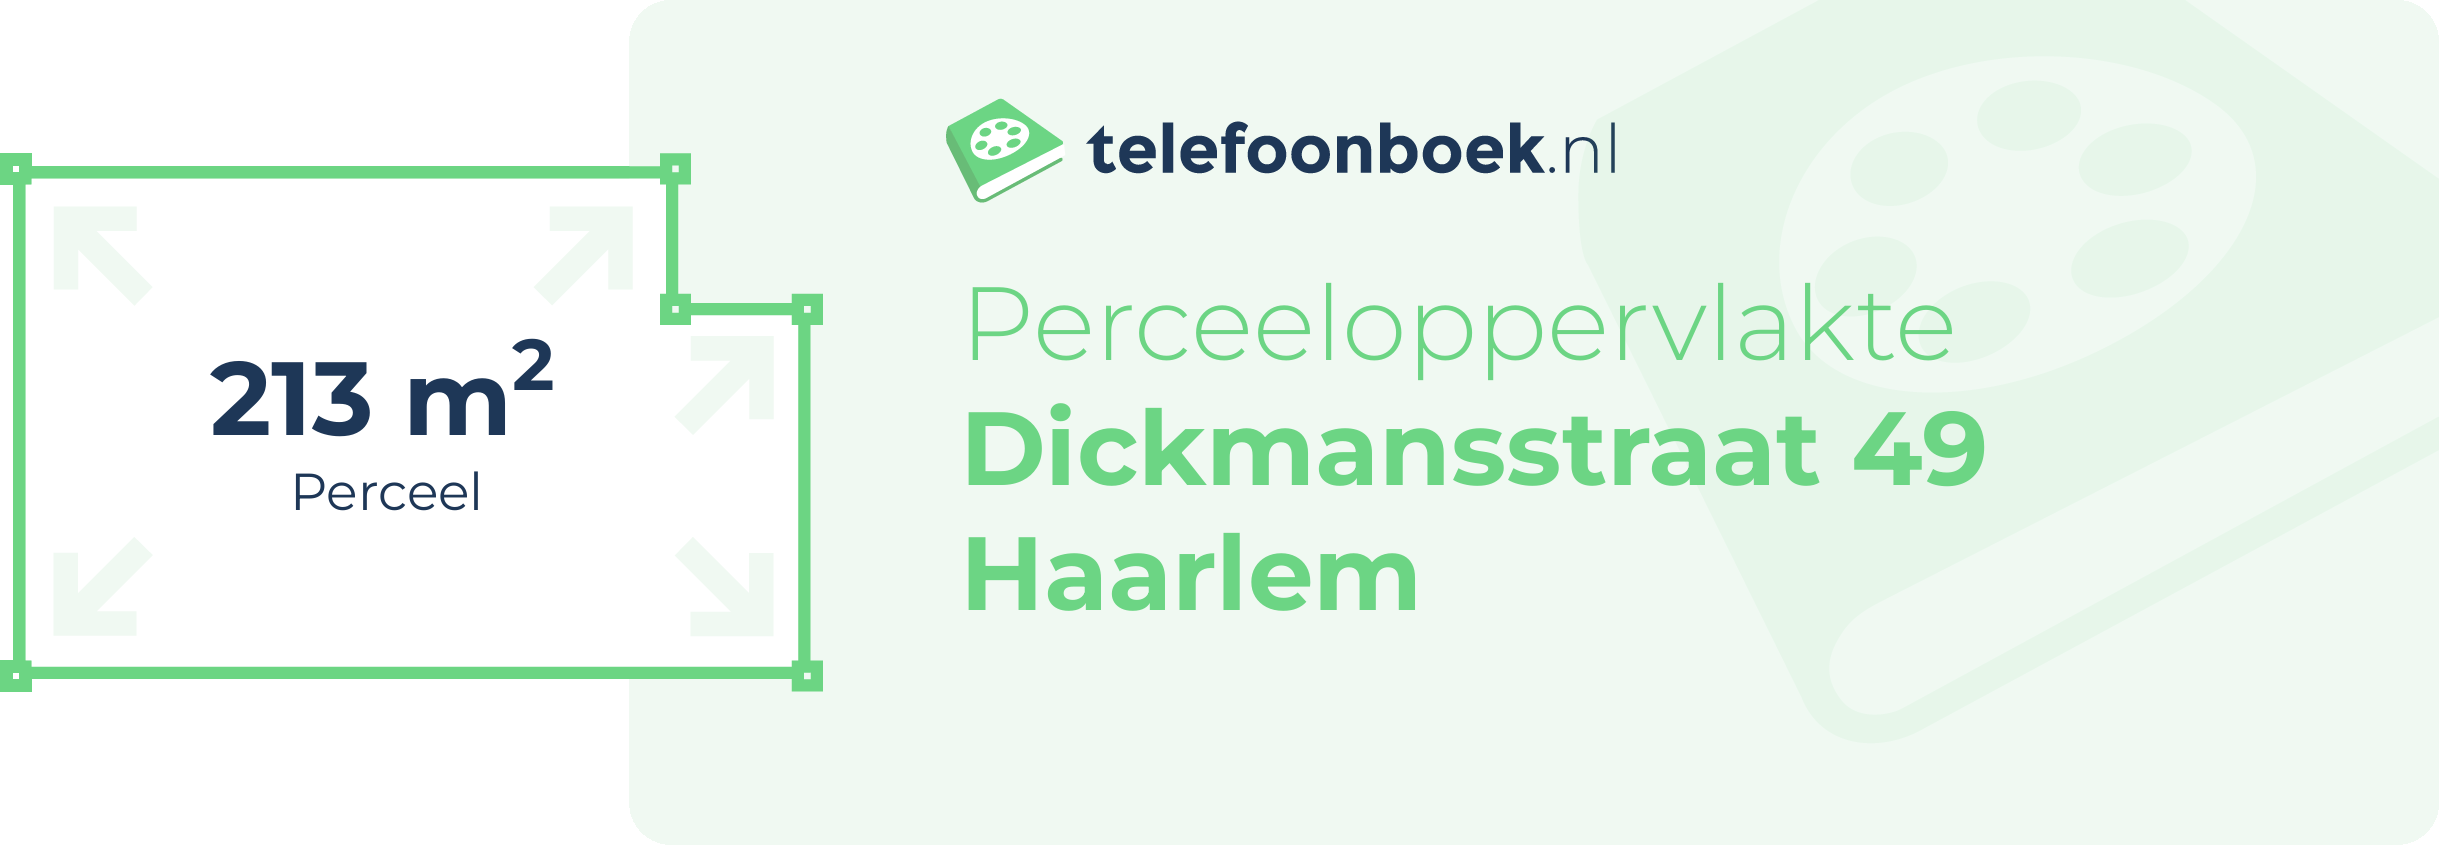 Perceeloppervlakte Dickmansstraat 49 Haarlem